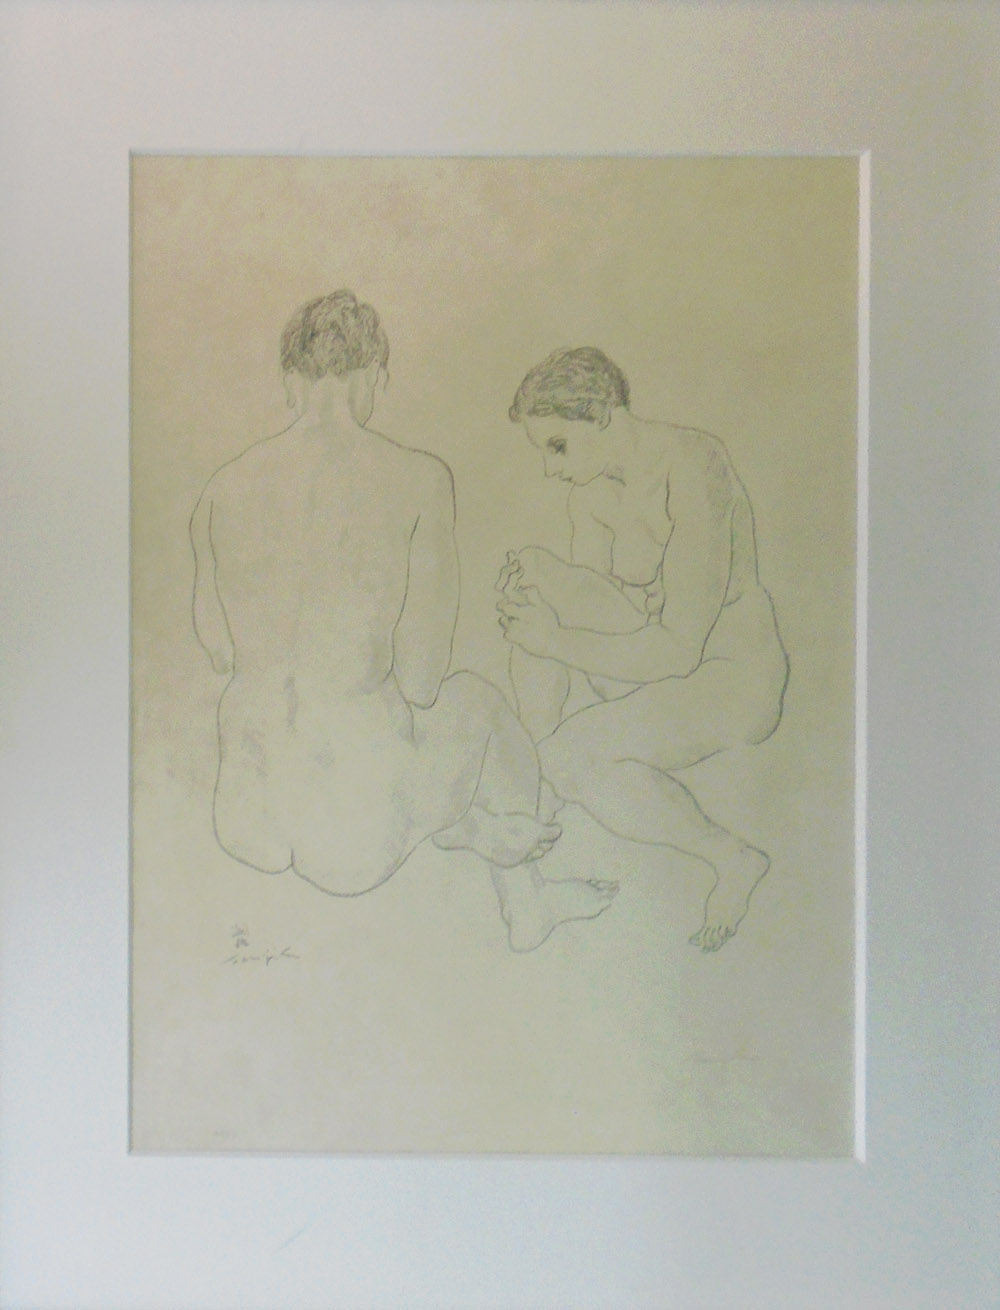 TSUGUHARU LEONARD FOUJITA (French-Japanese, 1886-1968), 'Etude de Nus' (Study of Nudes) (S.